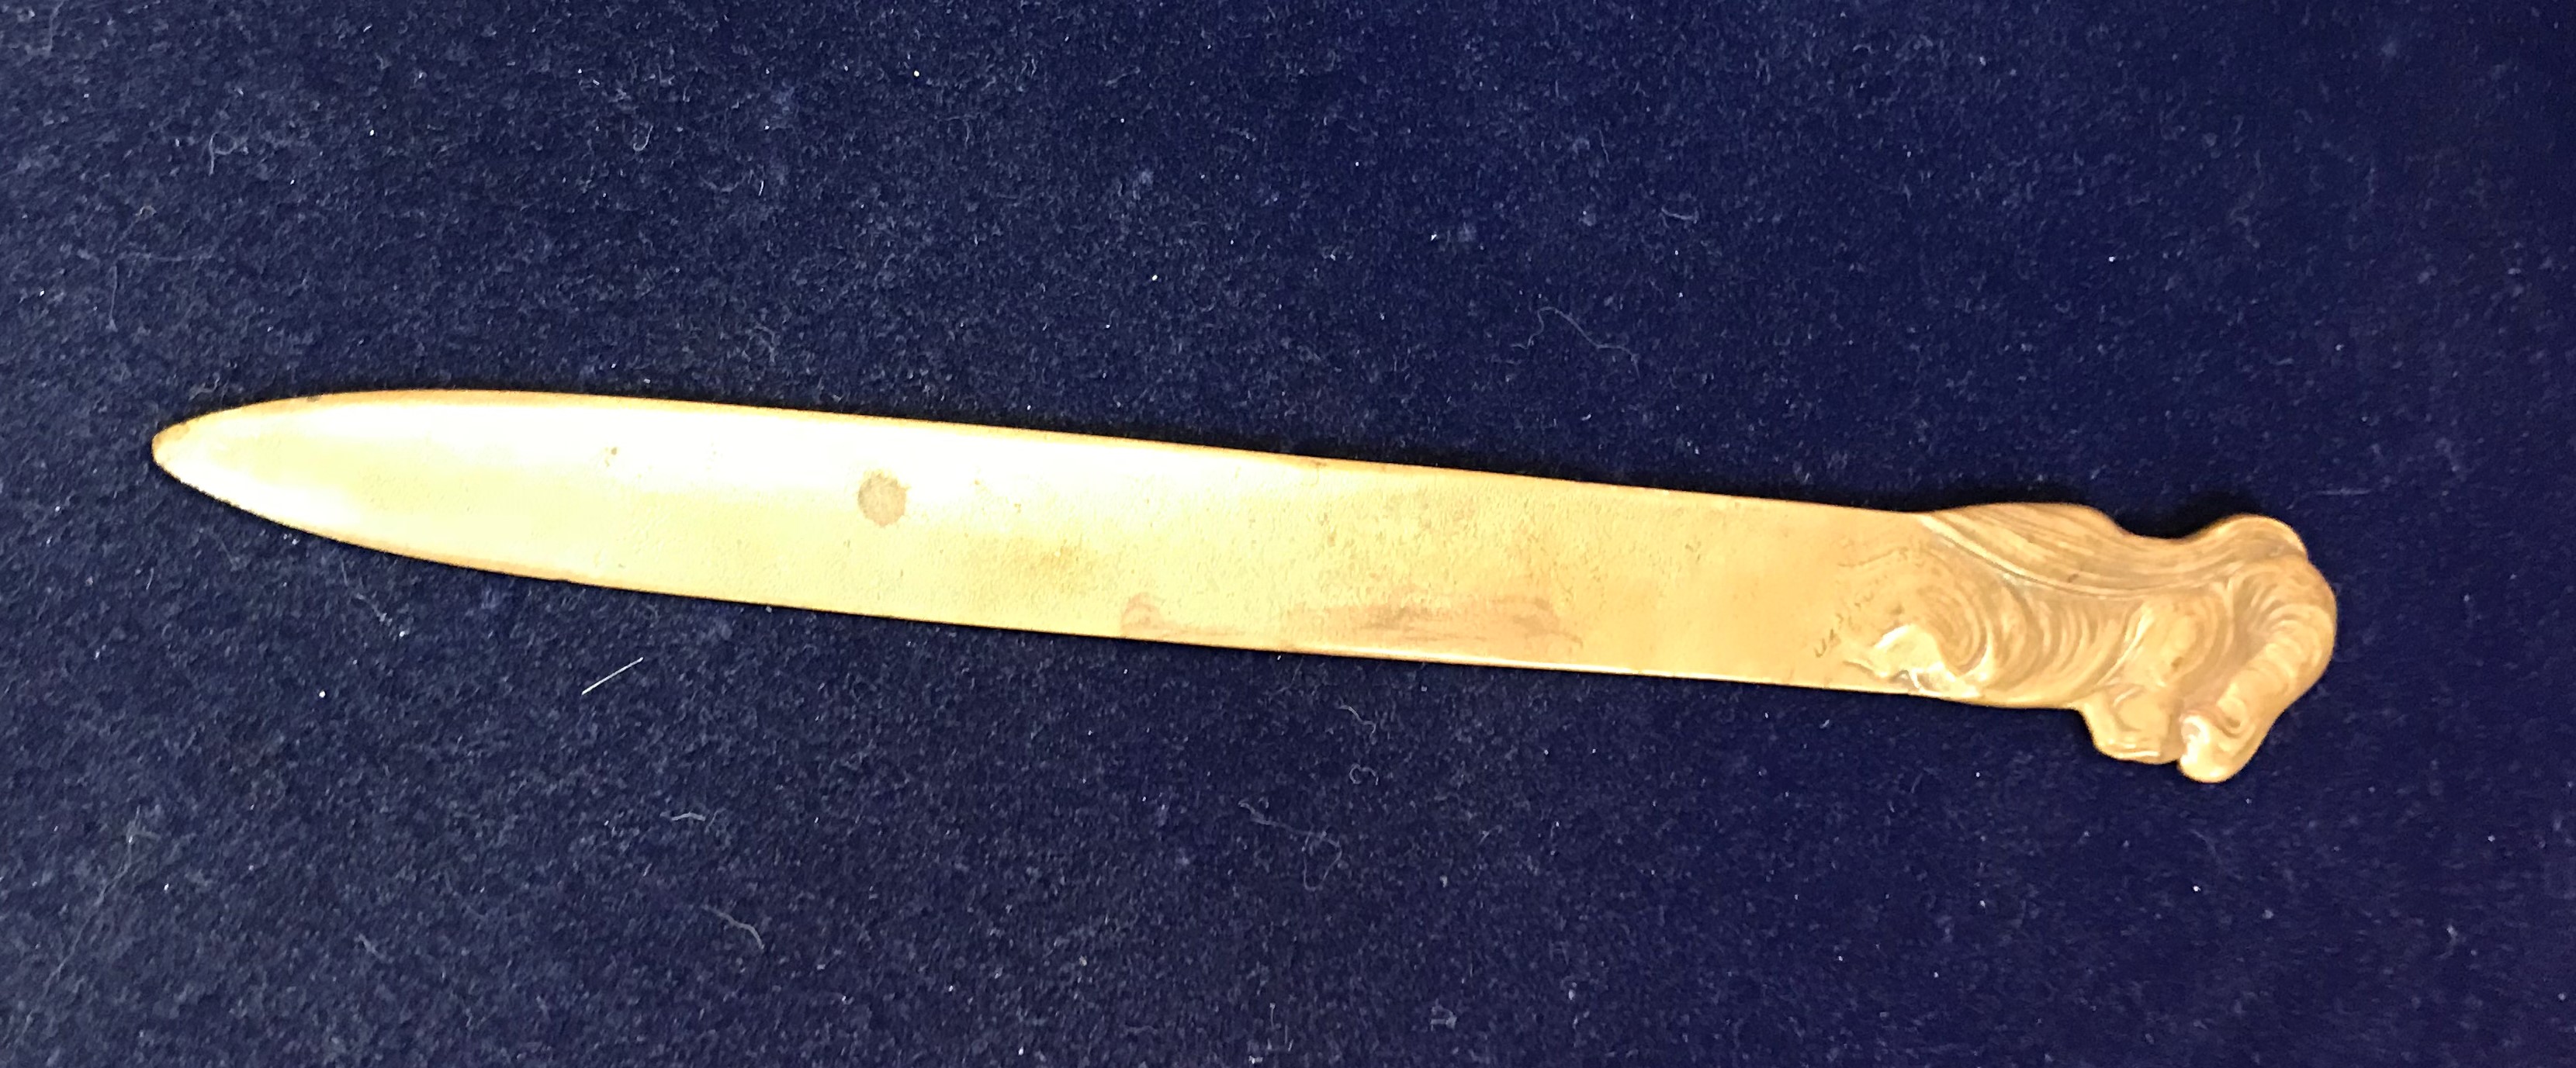 An Art Nouveau style brass paperknife, t - Image 2 of 2